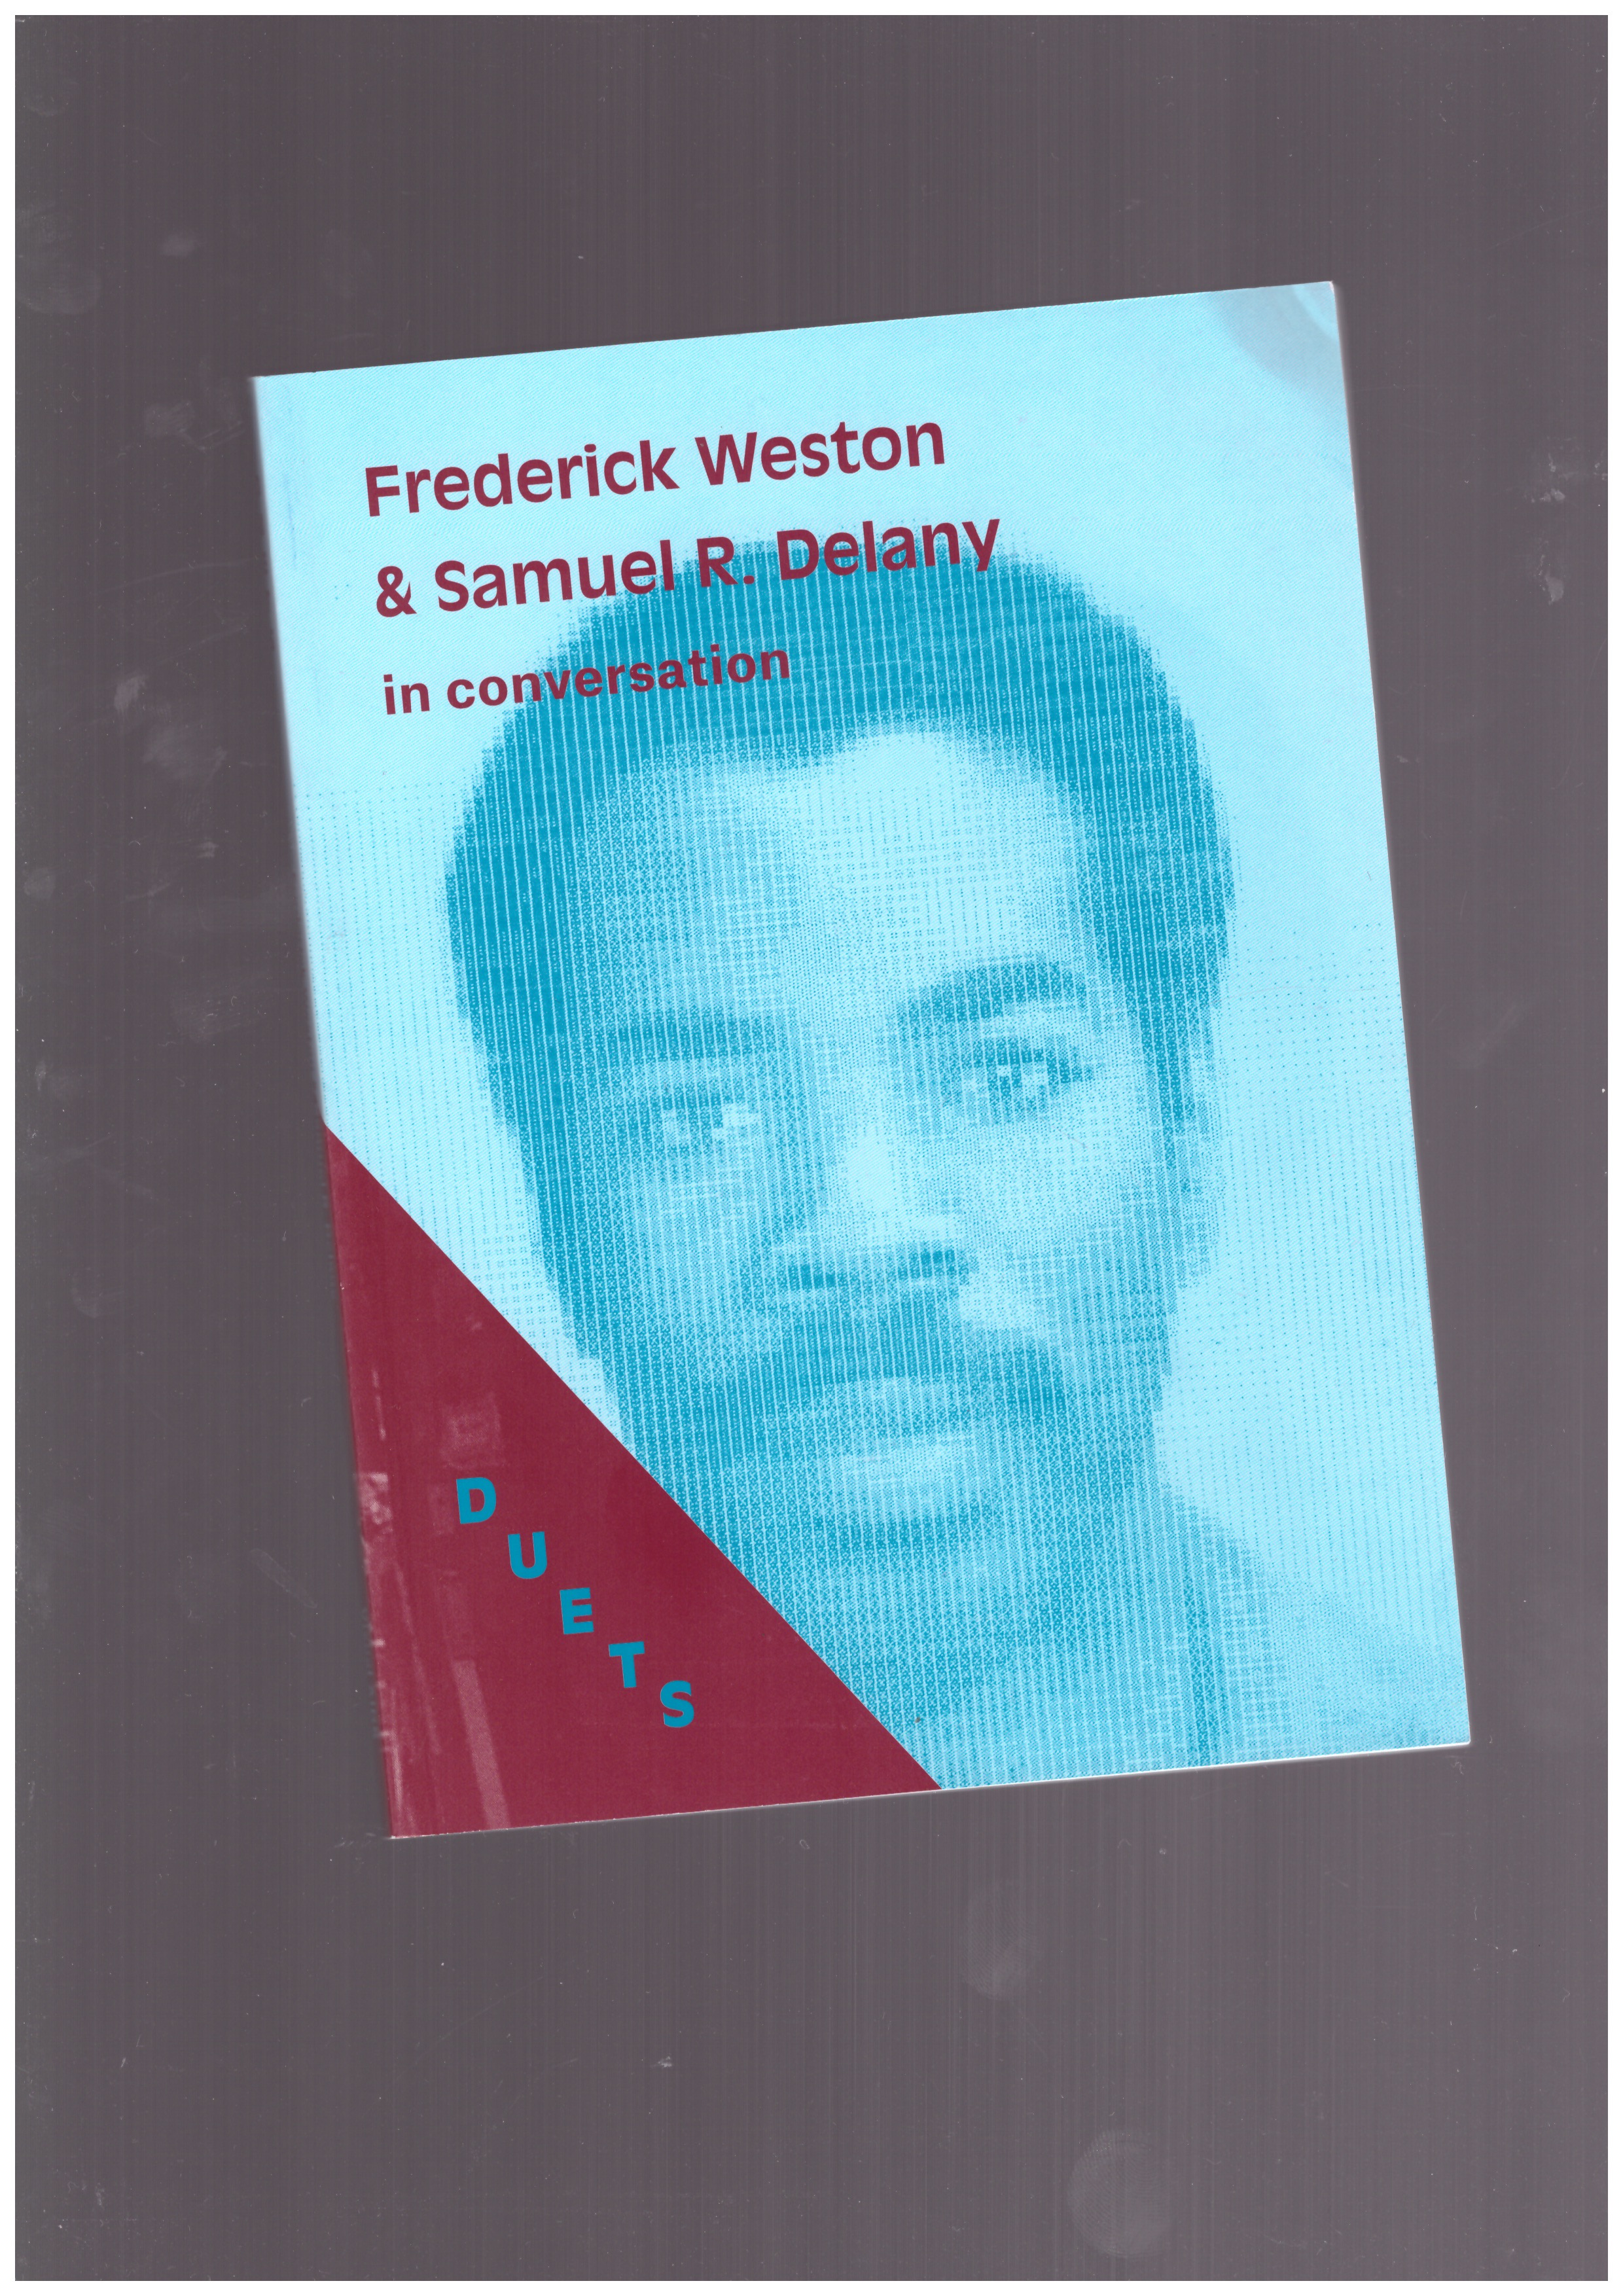 WESTON, Frederick; DELANY, Samuel R. - Duets: Frederick Weston & Samuel R. Delany in conversation